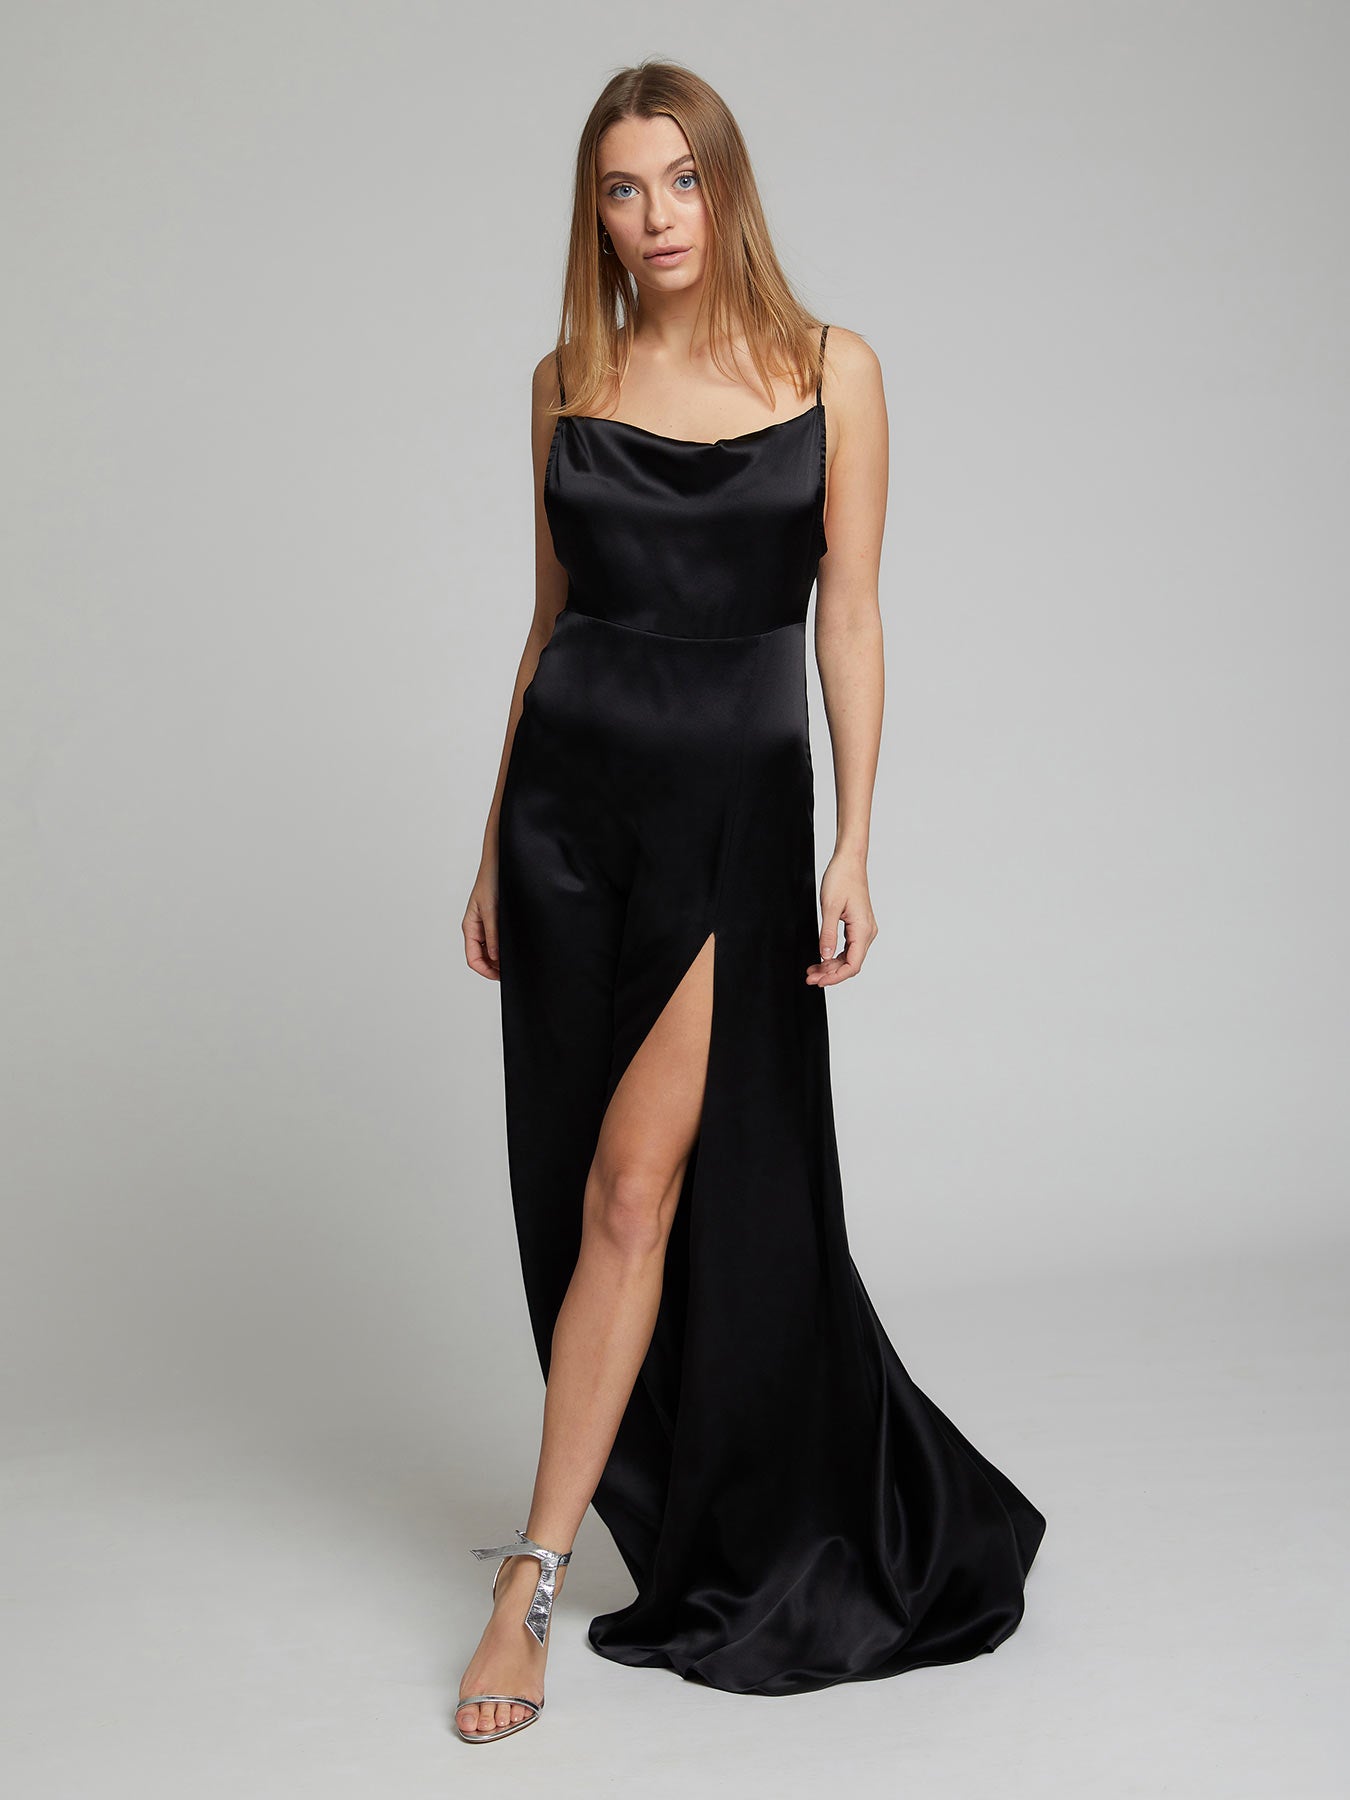 Salome silk slip dress in black | Constellation Âme